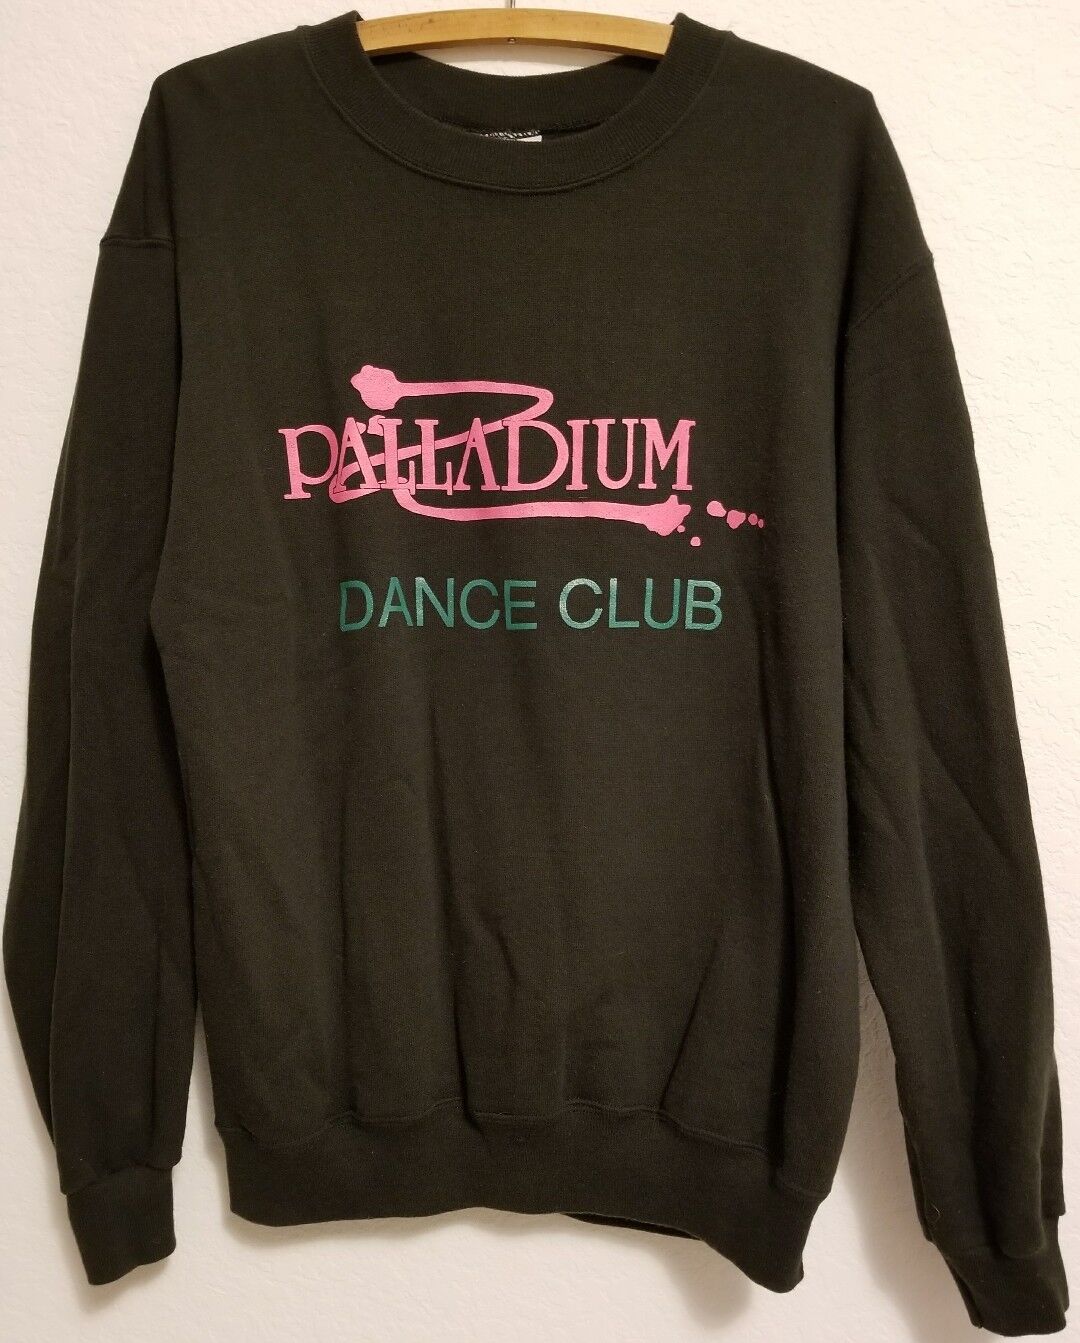 Vintage Palladium Dance Club Sweatshirt, Size L / 42-44